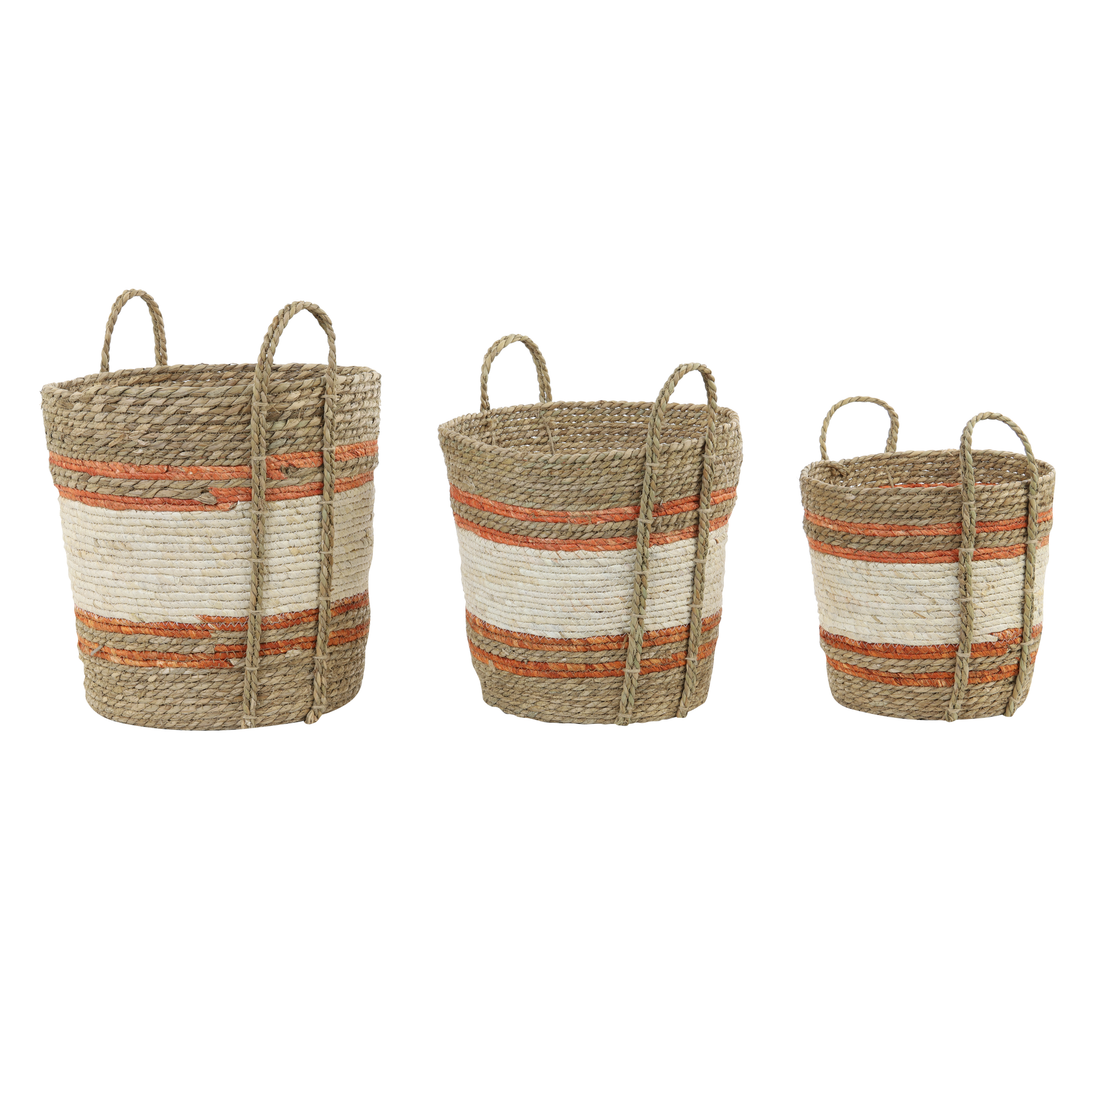 Juego de 3 cestas GAMEIRO hechas a mano en blanco y naranja natural.